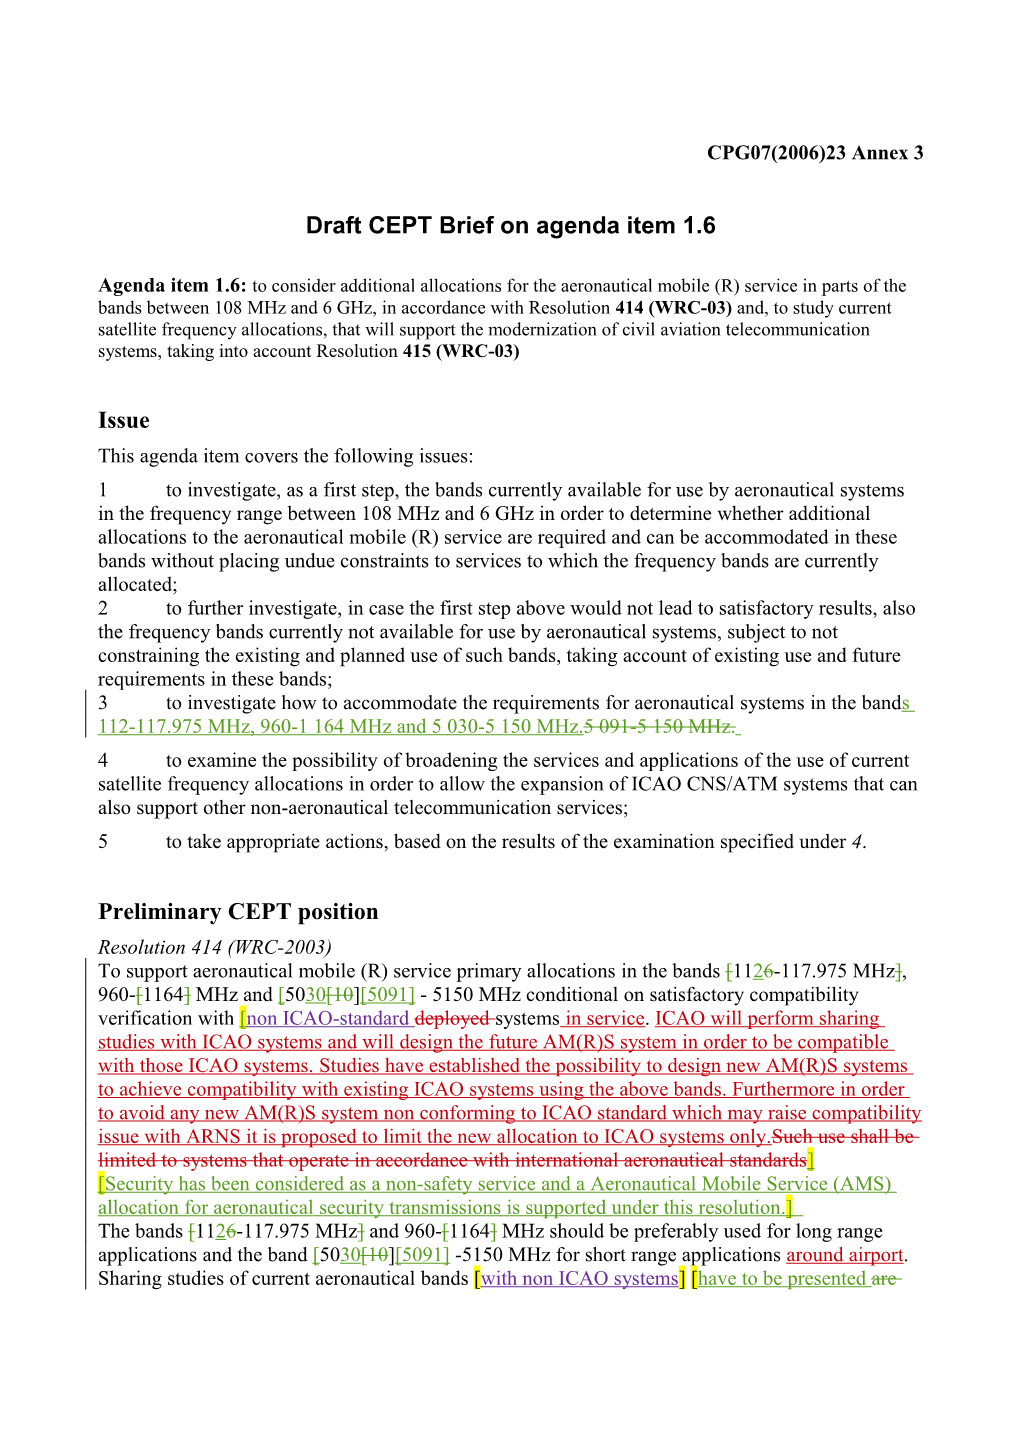 Draft CEPT Brief on WRC-07 Agenda Item 1.6